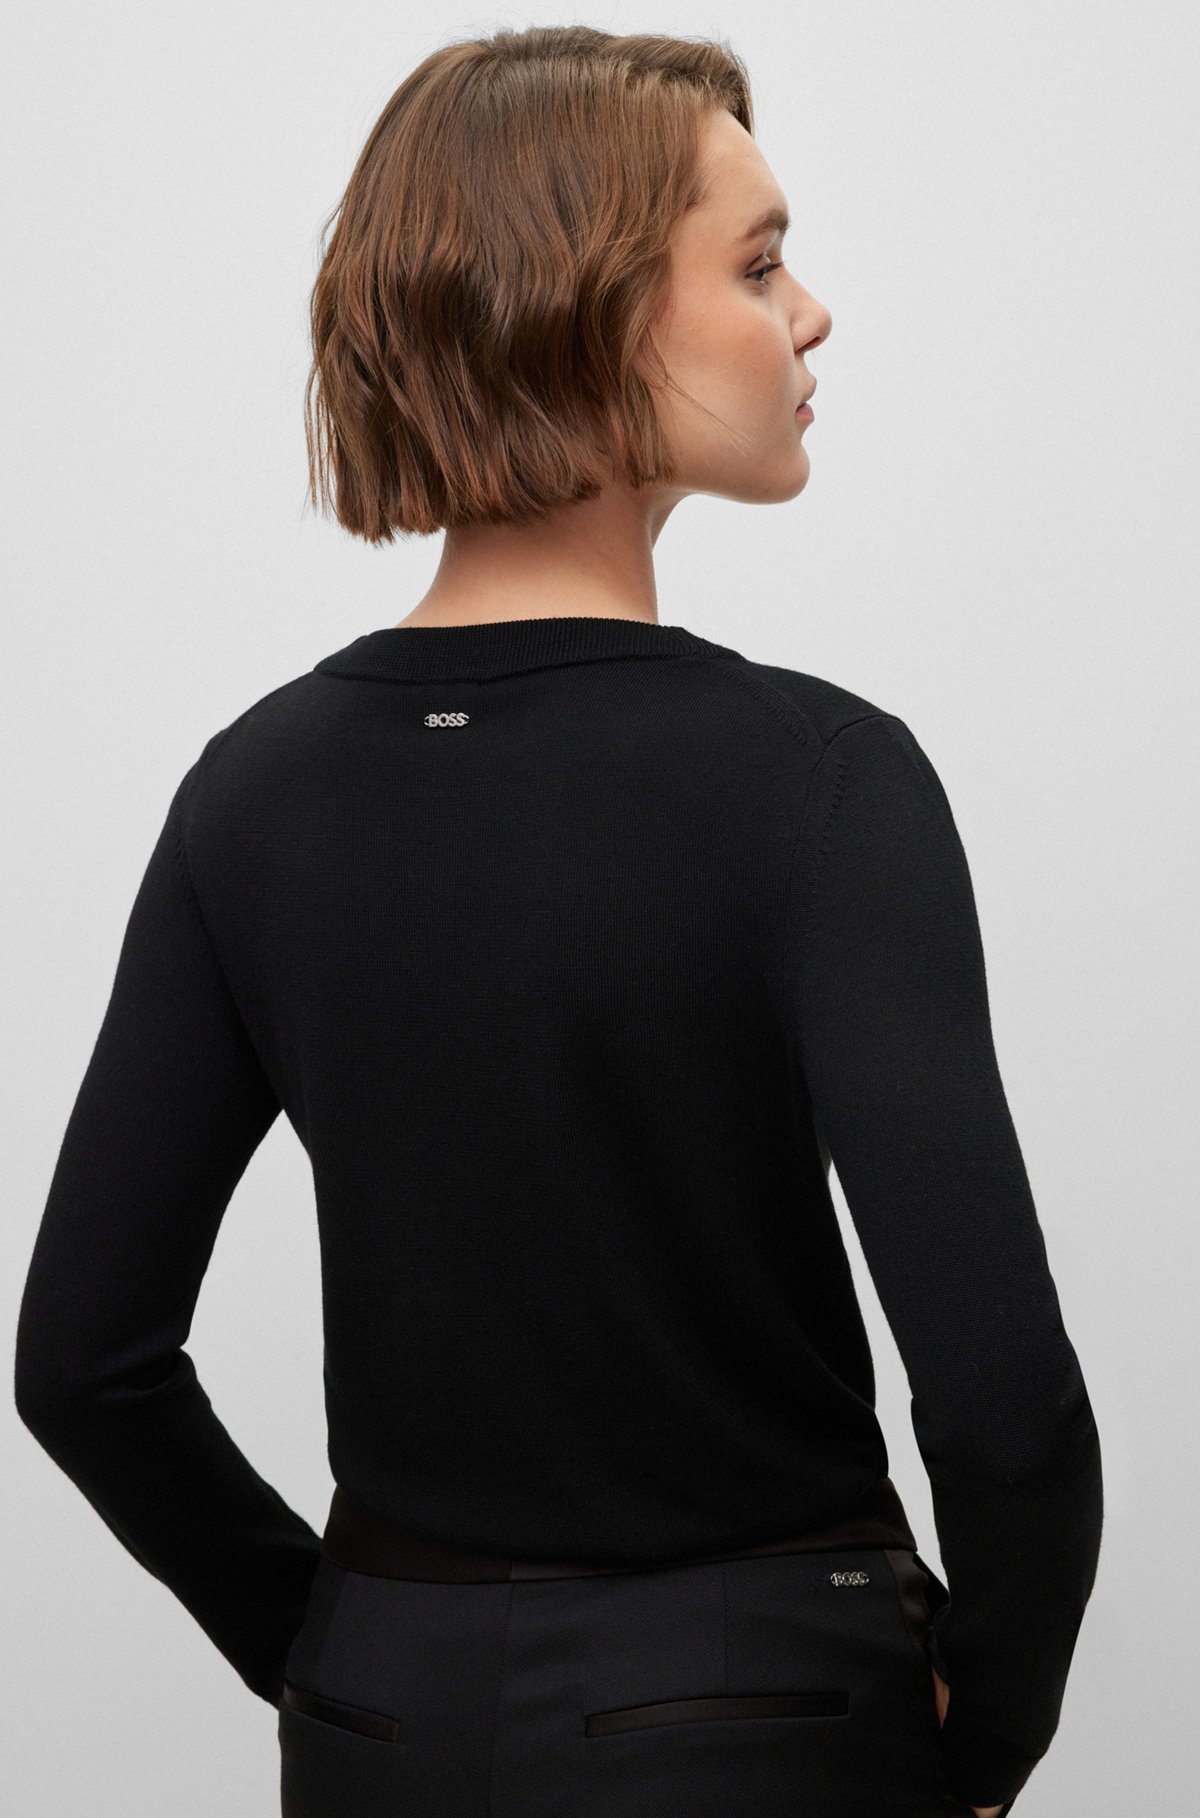 Crew-neck sweater in merino wool, Black